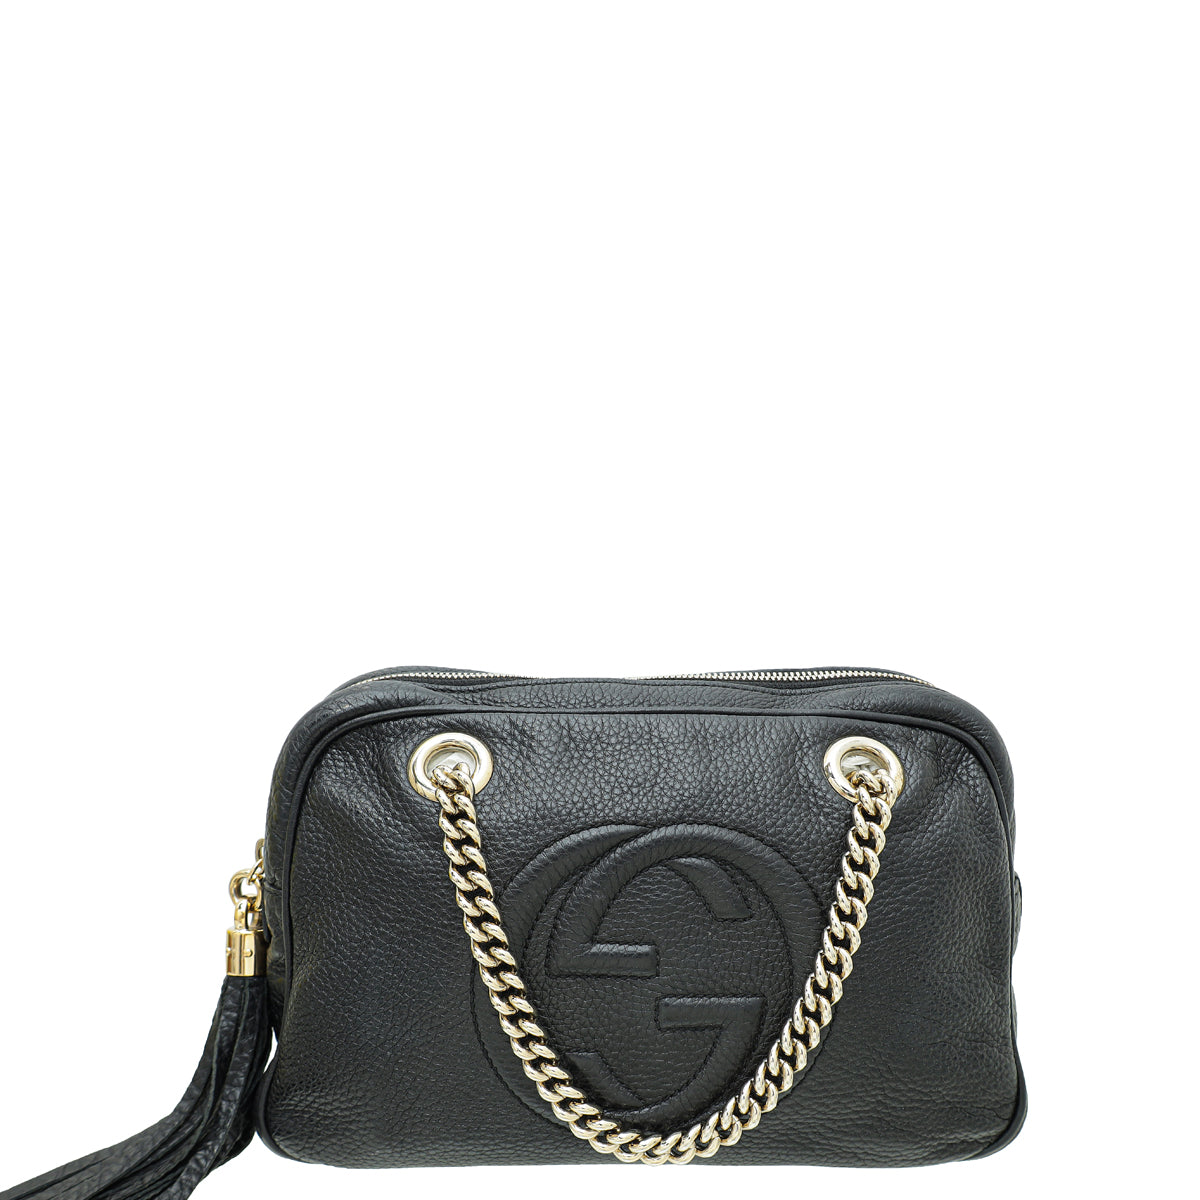 Gucci Black Soho Chain Shoulder Bag Small